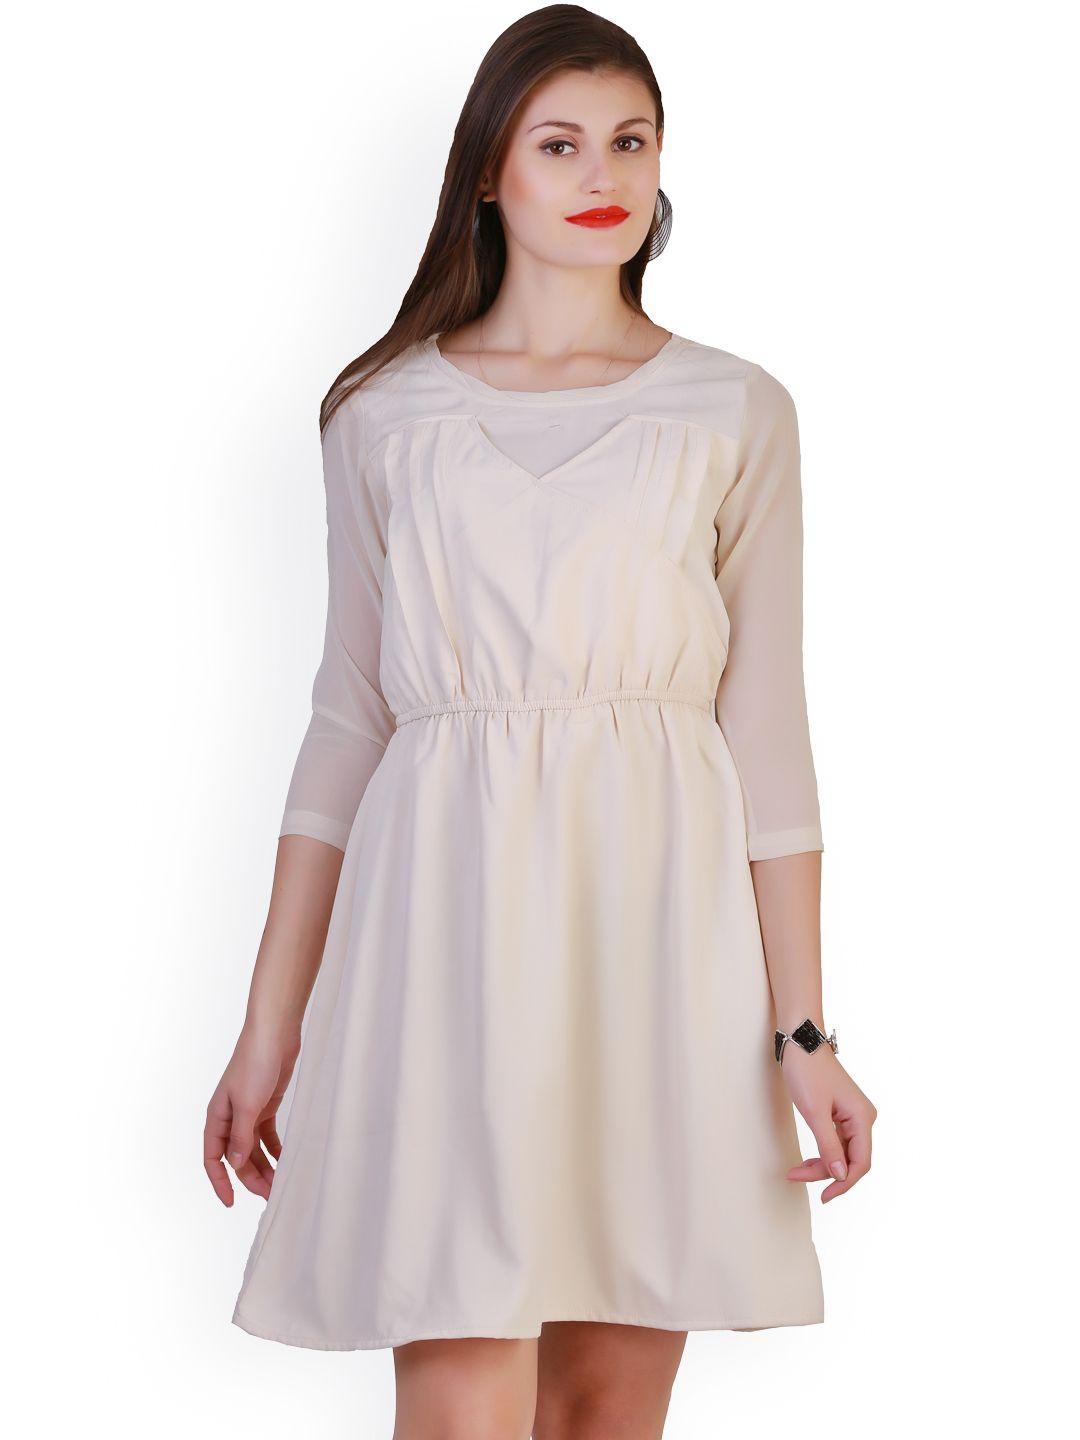 belle-fille-cream-coloured-a-line-dress